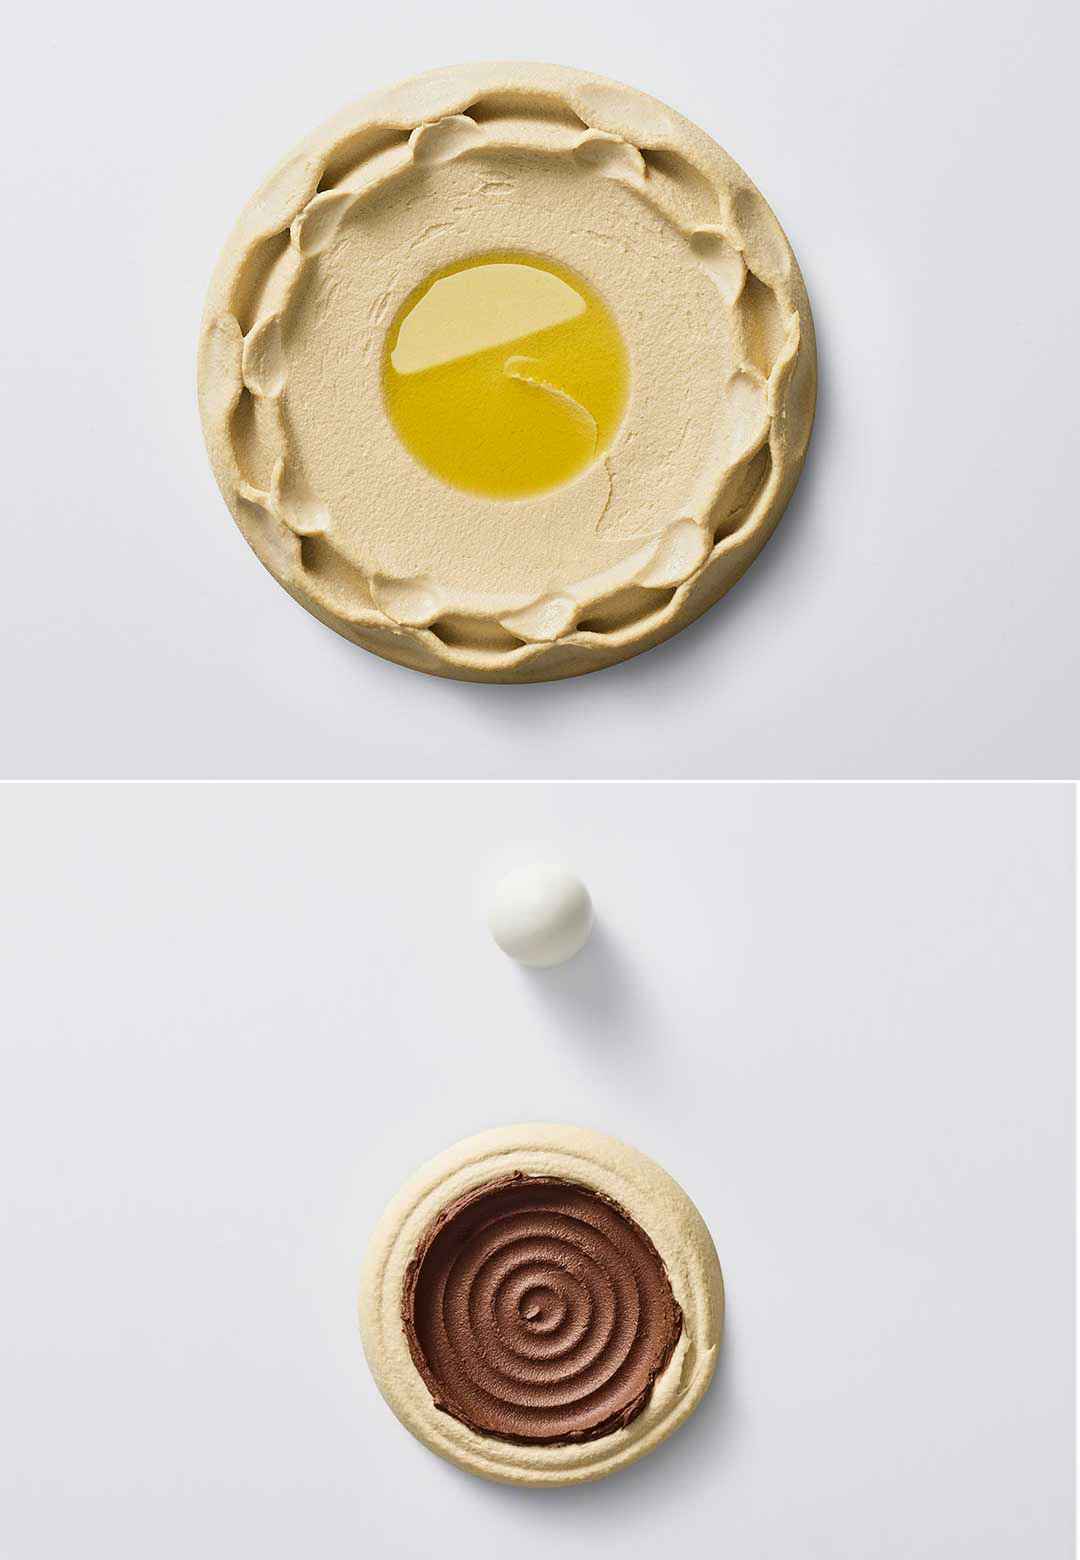 ‘Speculative Hummus’ by Reddish Studio explores the process of jigger through traditional hummus plating